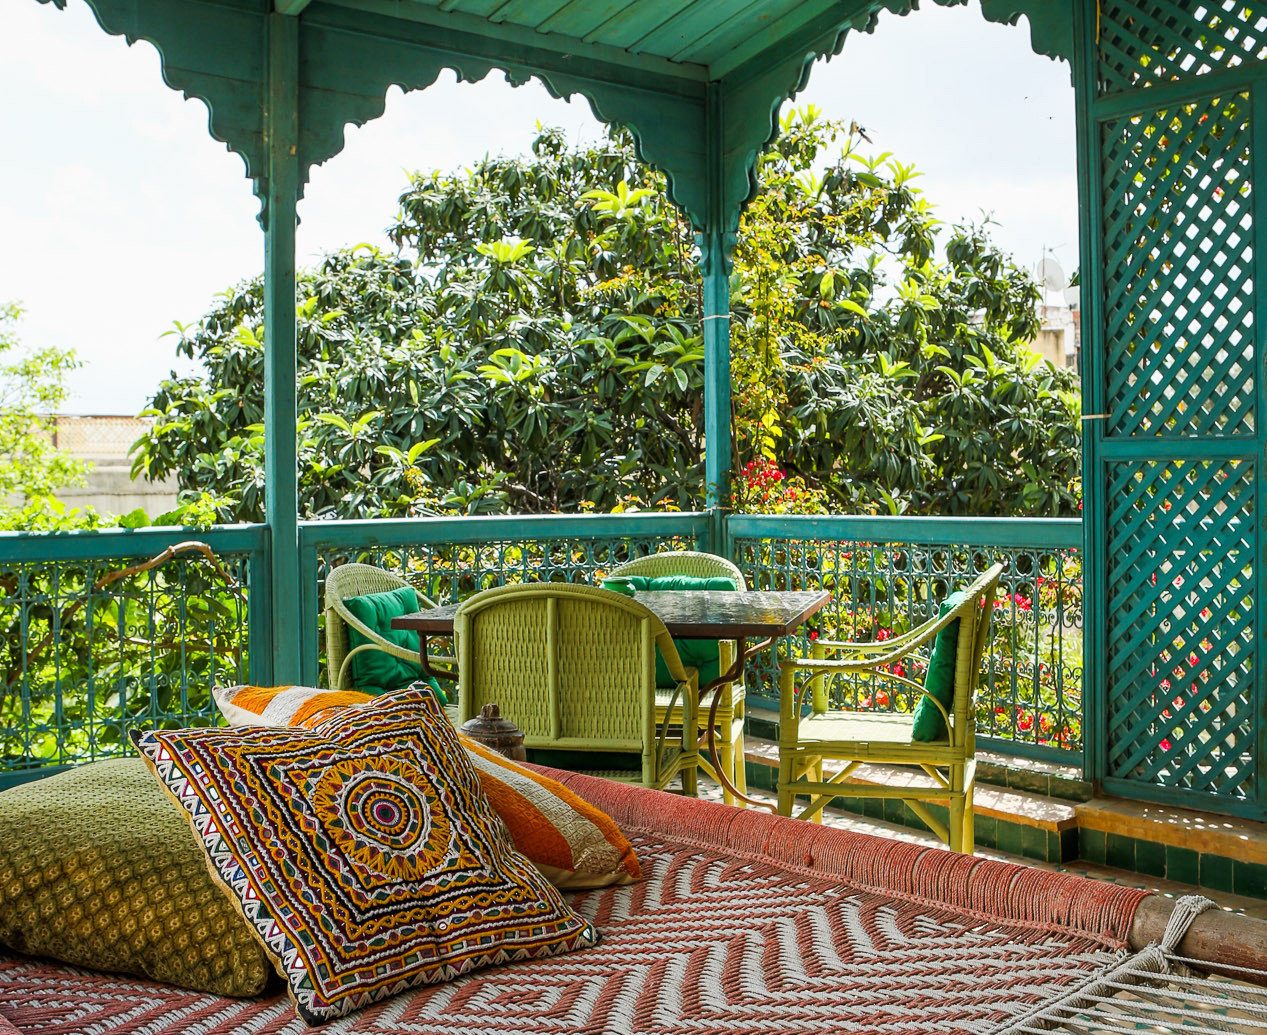 Hotels estate backyard outdoor structure walkway pergola Garden Courtyard porch furniture colorful